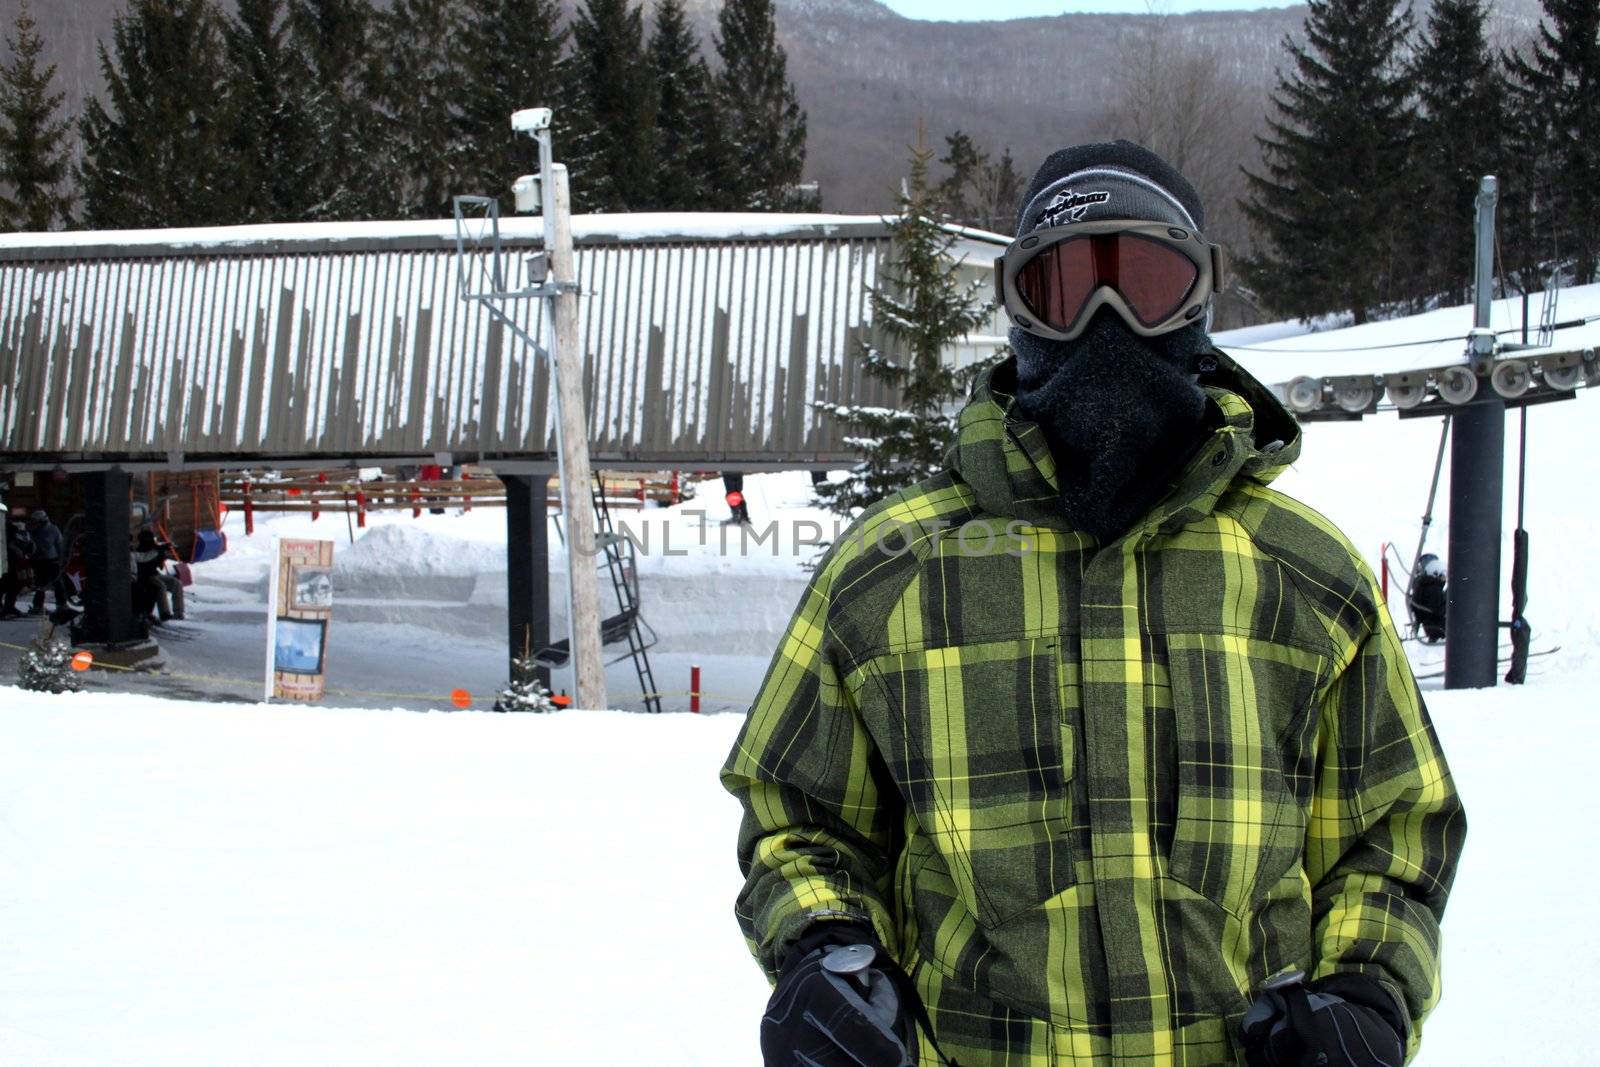 Skier hidden behind goggles and ski hood